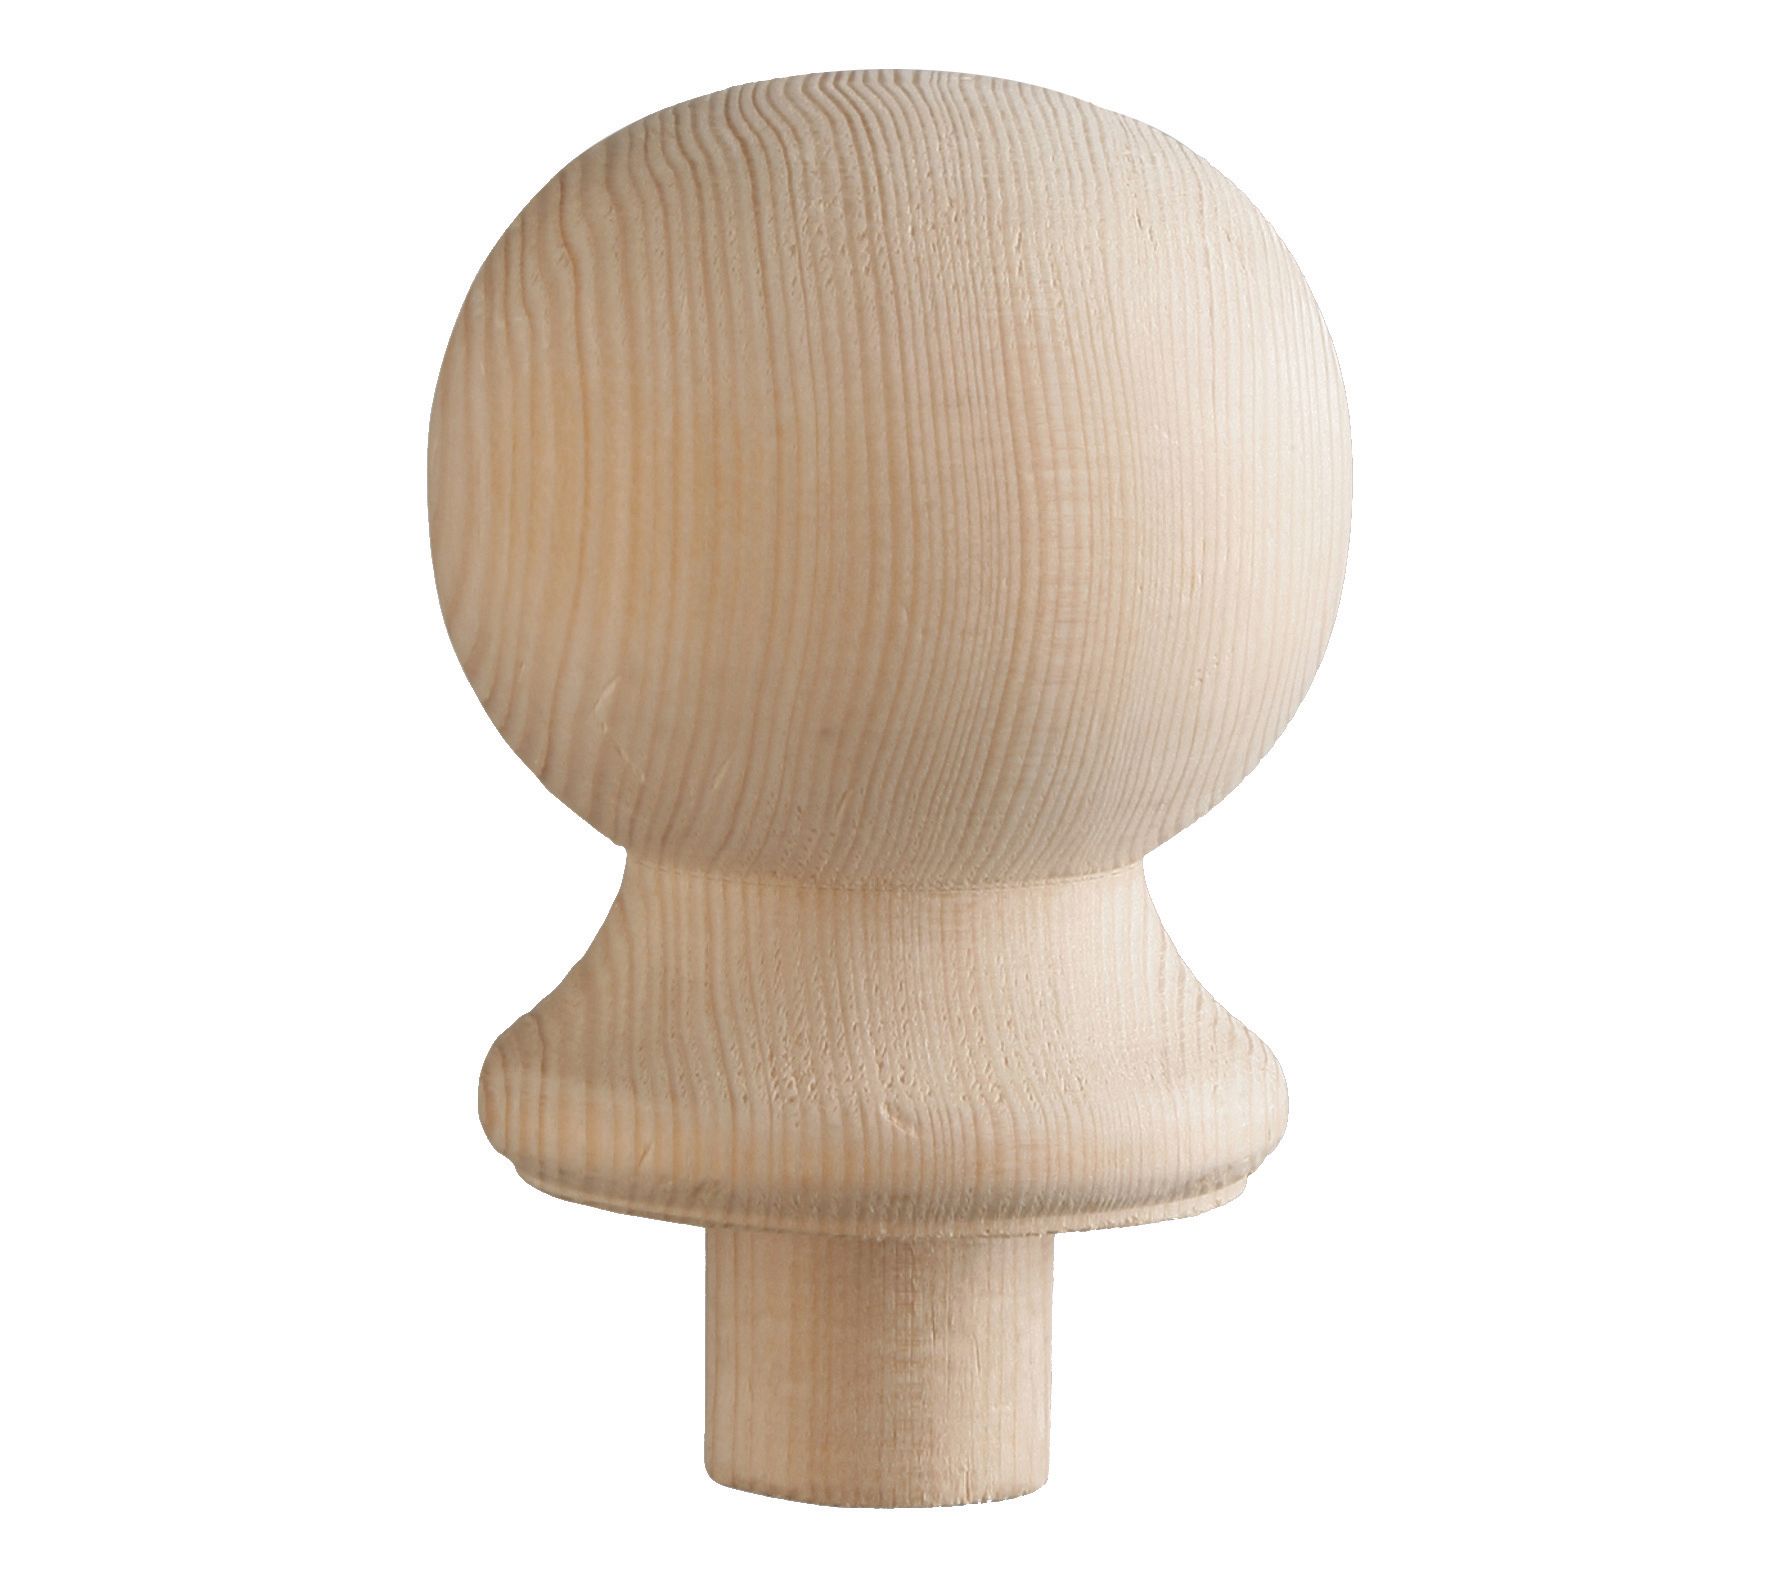 Image of Wickes Traditional Hemlock Ball Cap